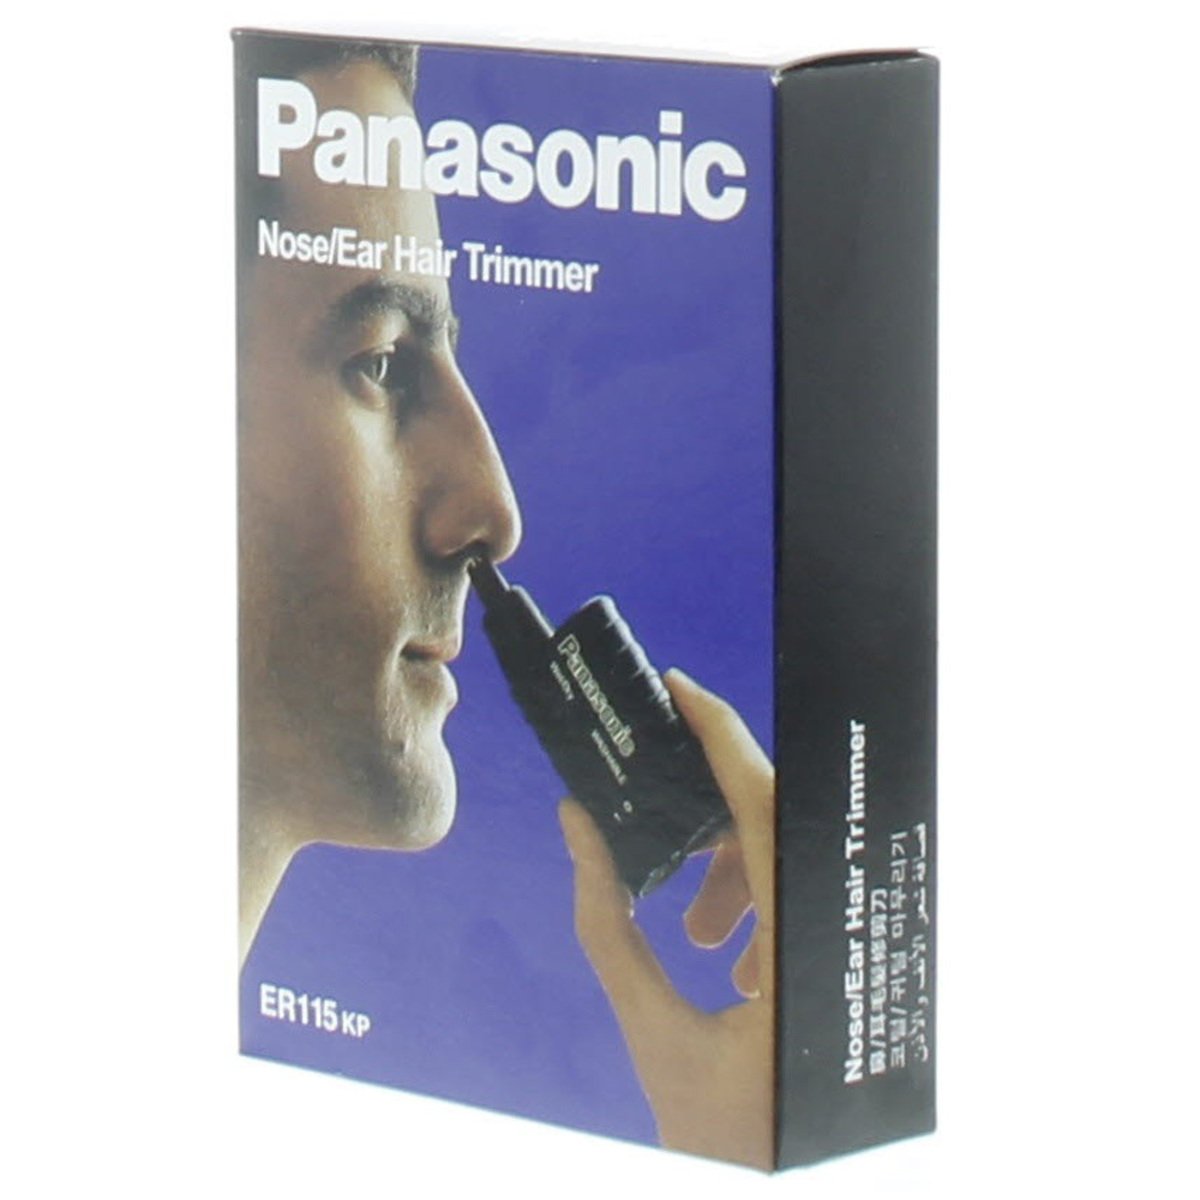 Panasonic Nose Trimmer ER115